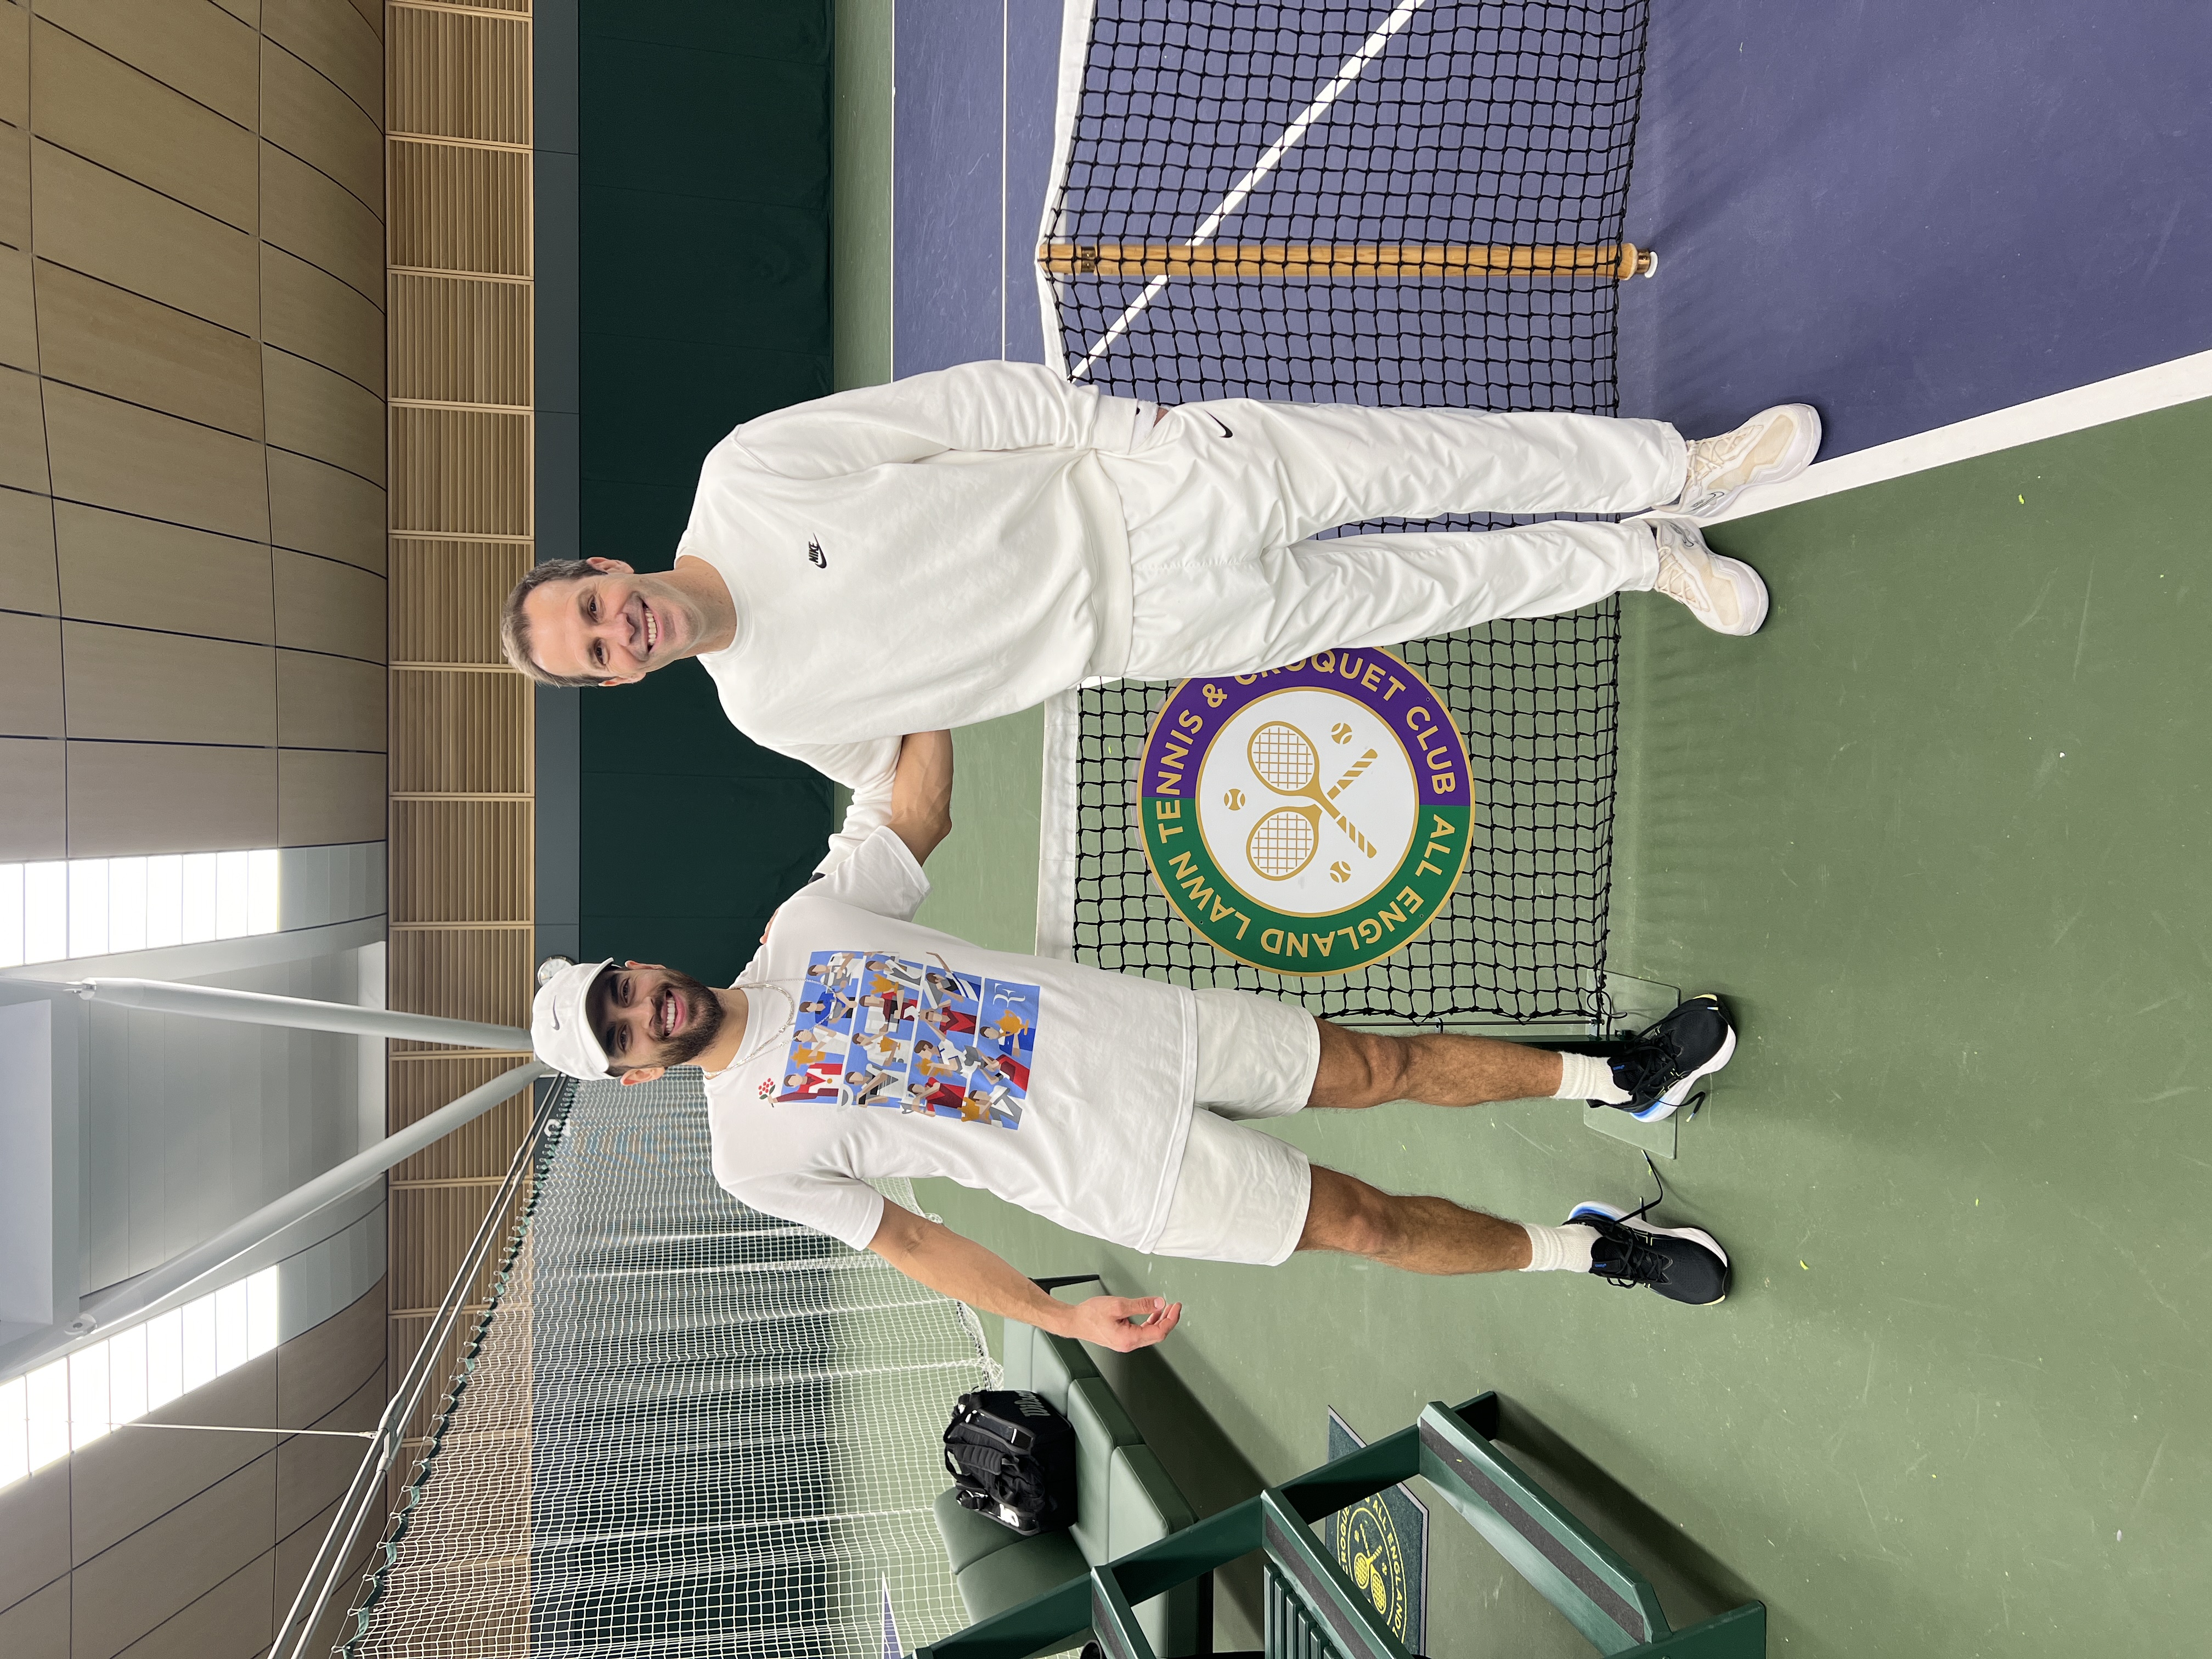 Training at Wimbledon with Rusedski